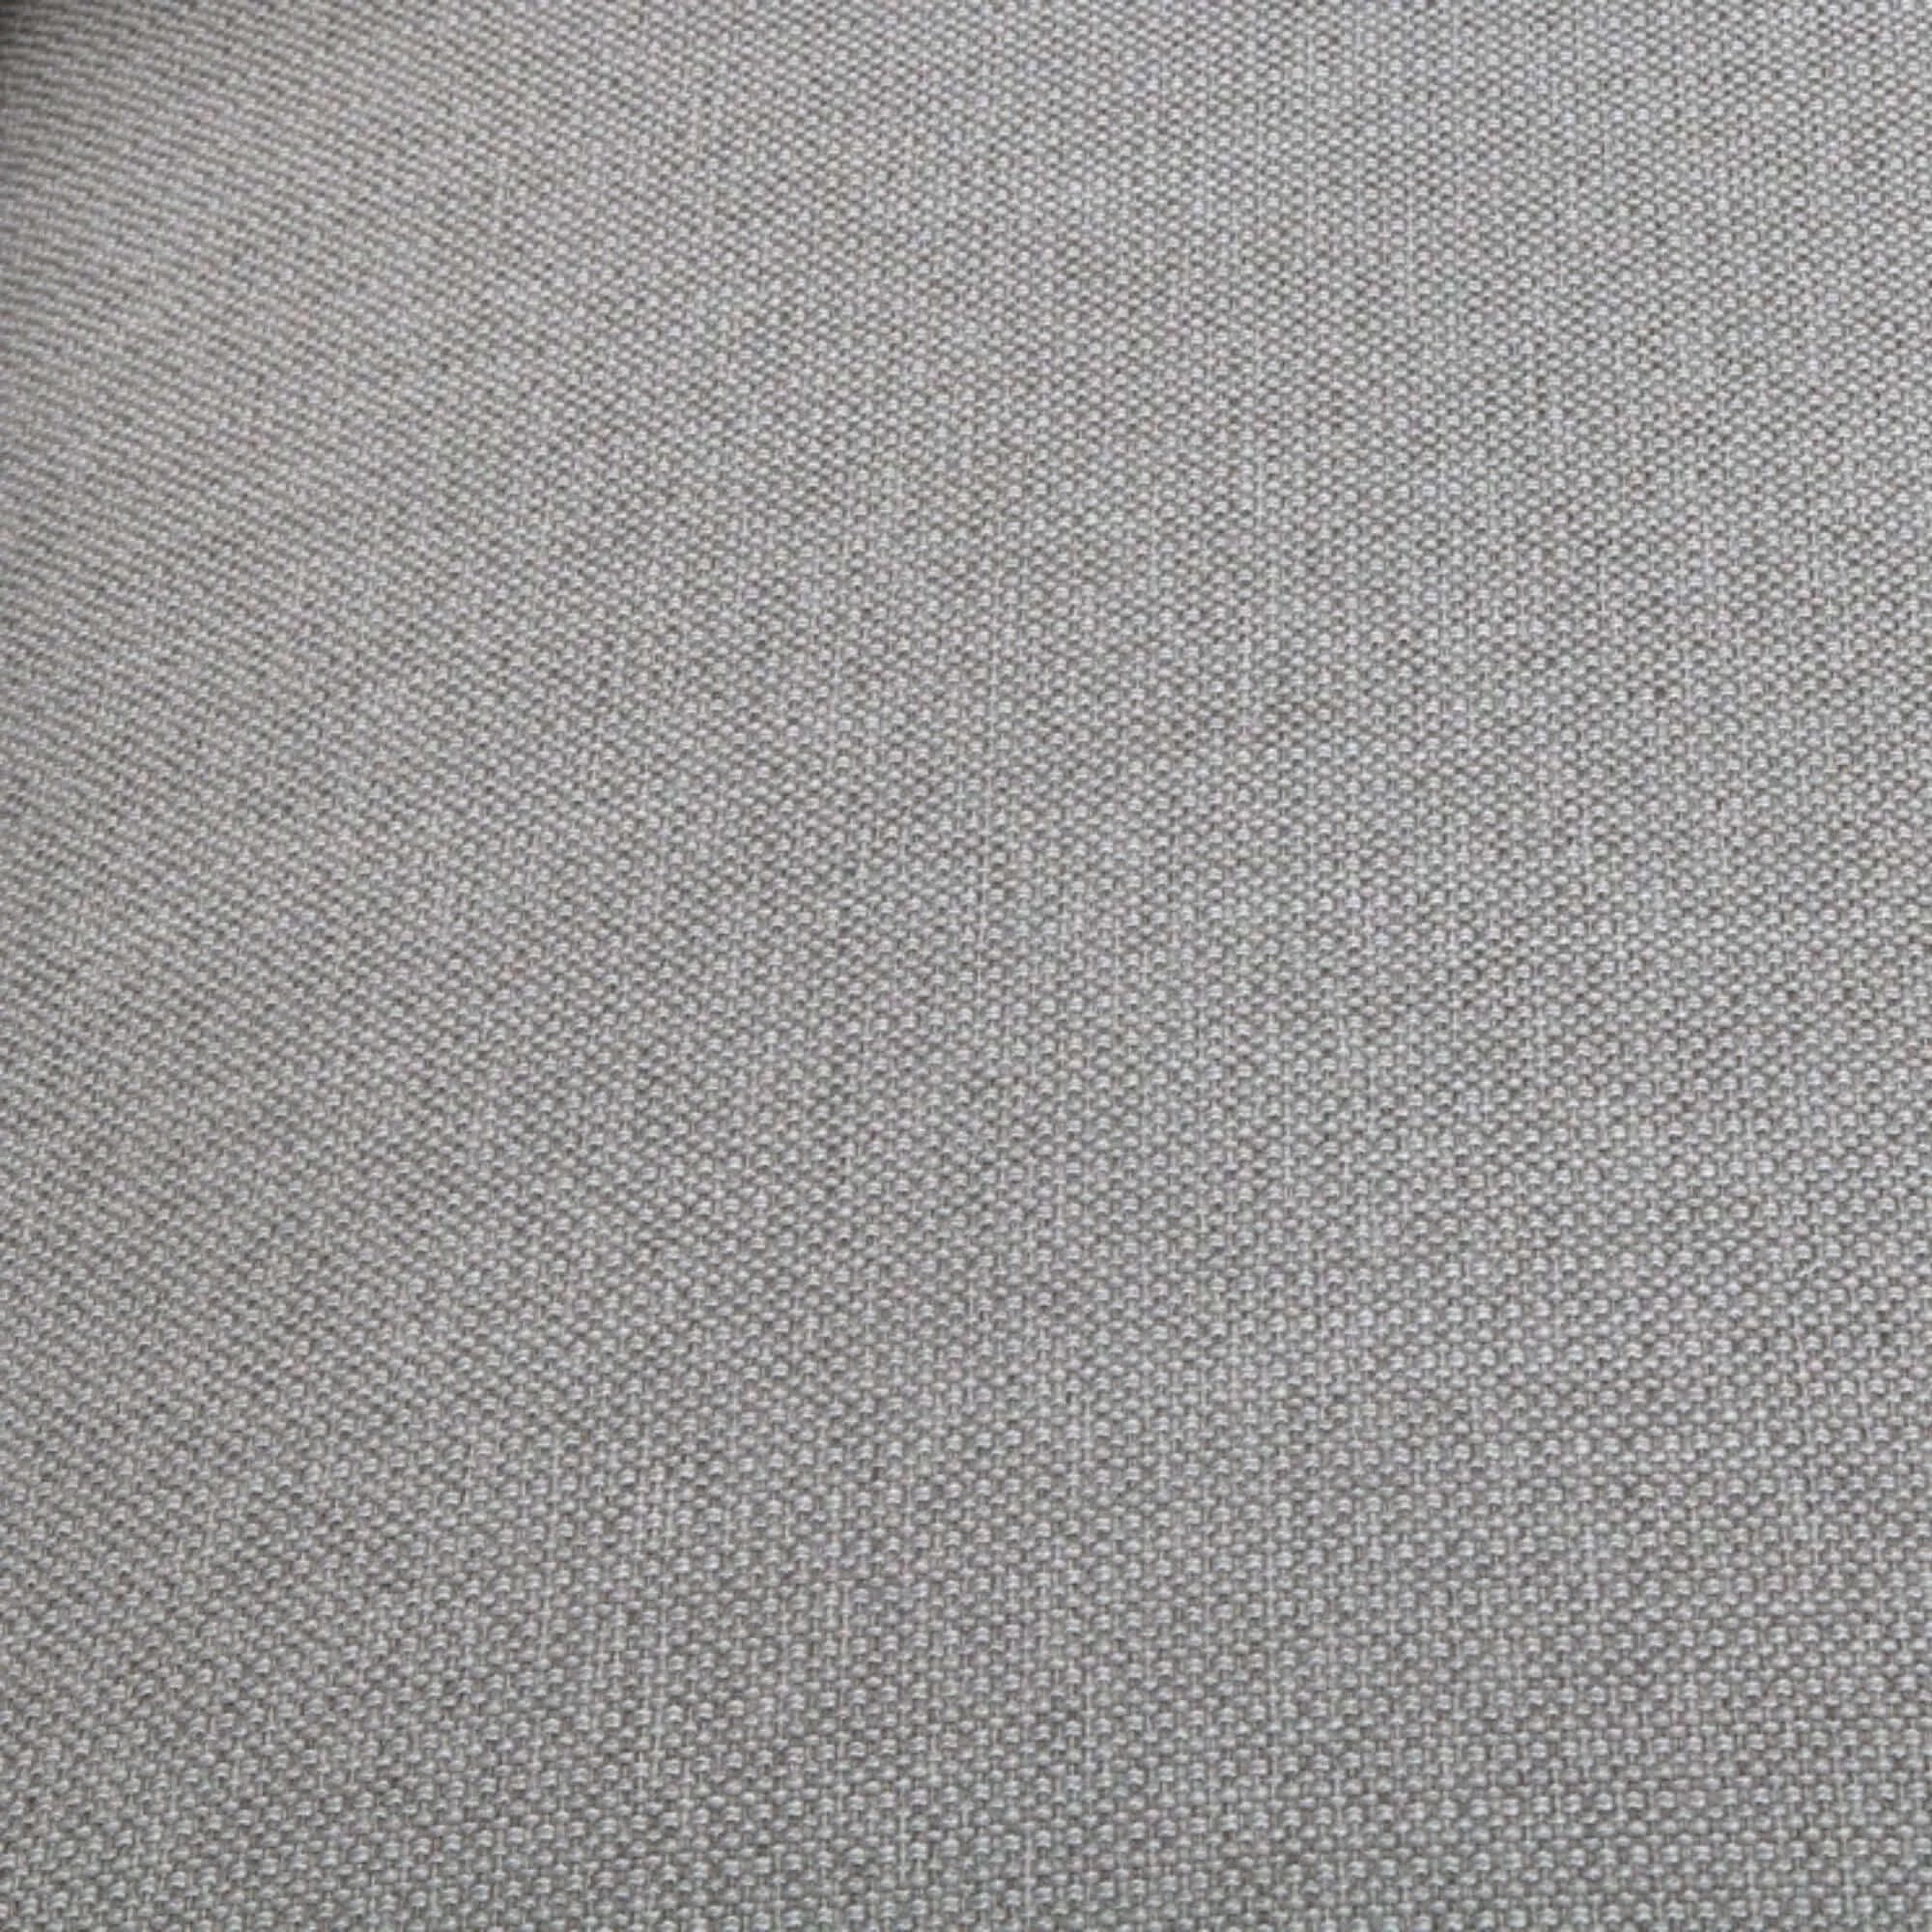 Buy petalsoft 2 + 3 seater sofa set fabric uplholstered lounge couch - grey - upinteriors-Upinteriors